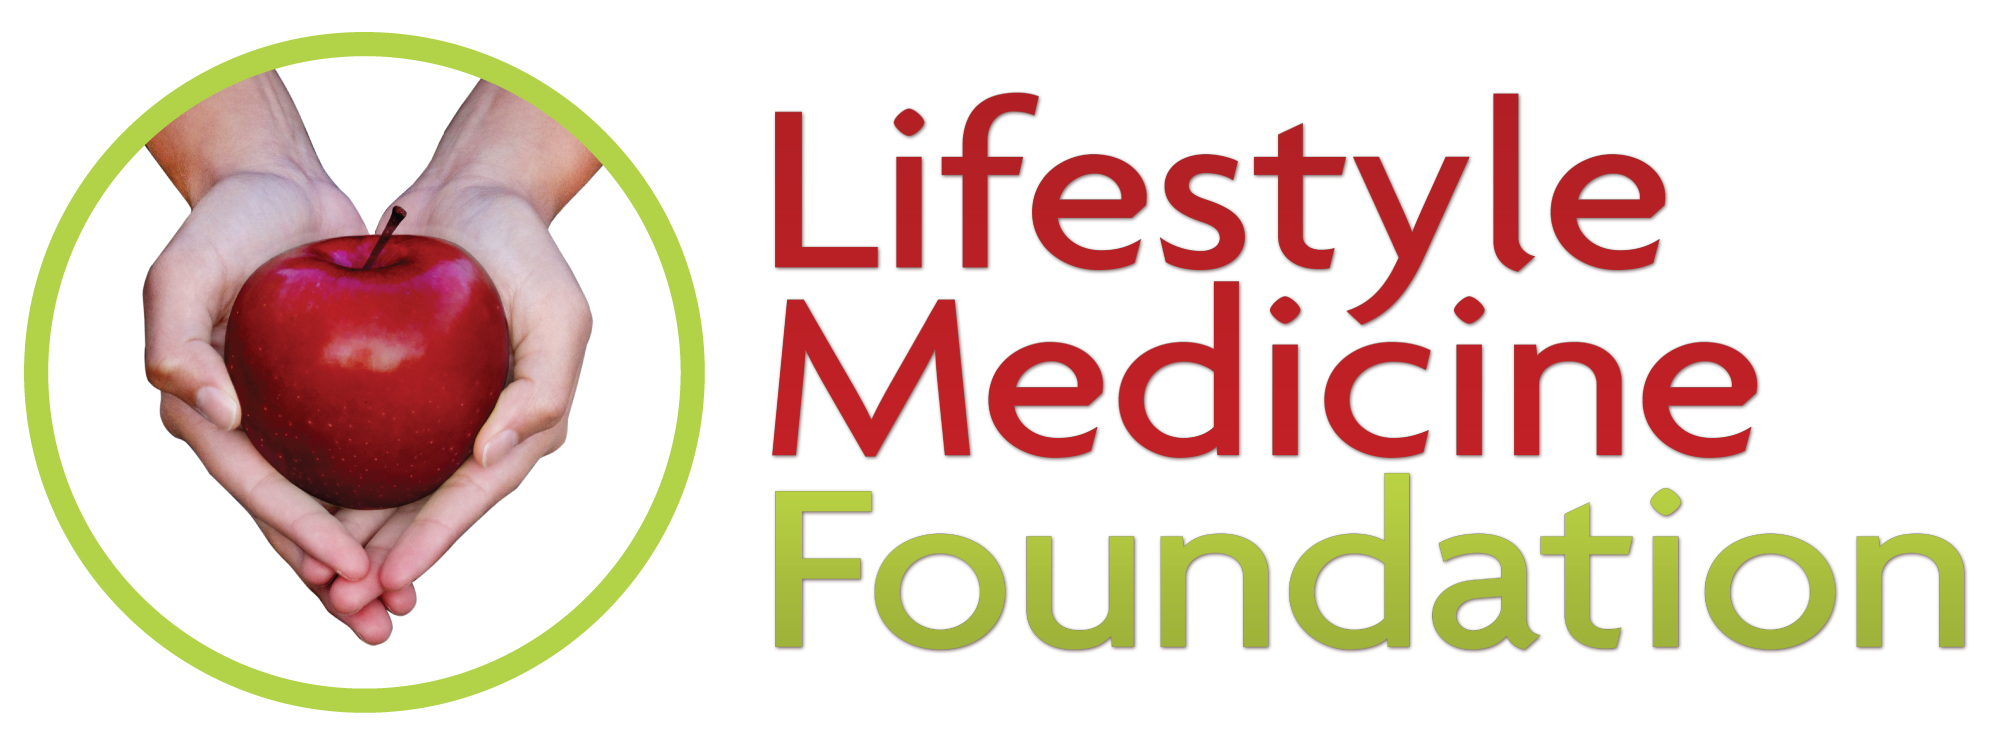 lifestylemedicinefound.org logo